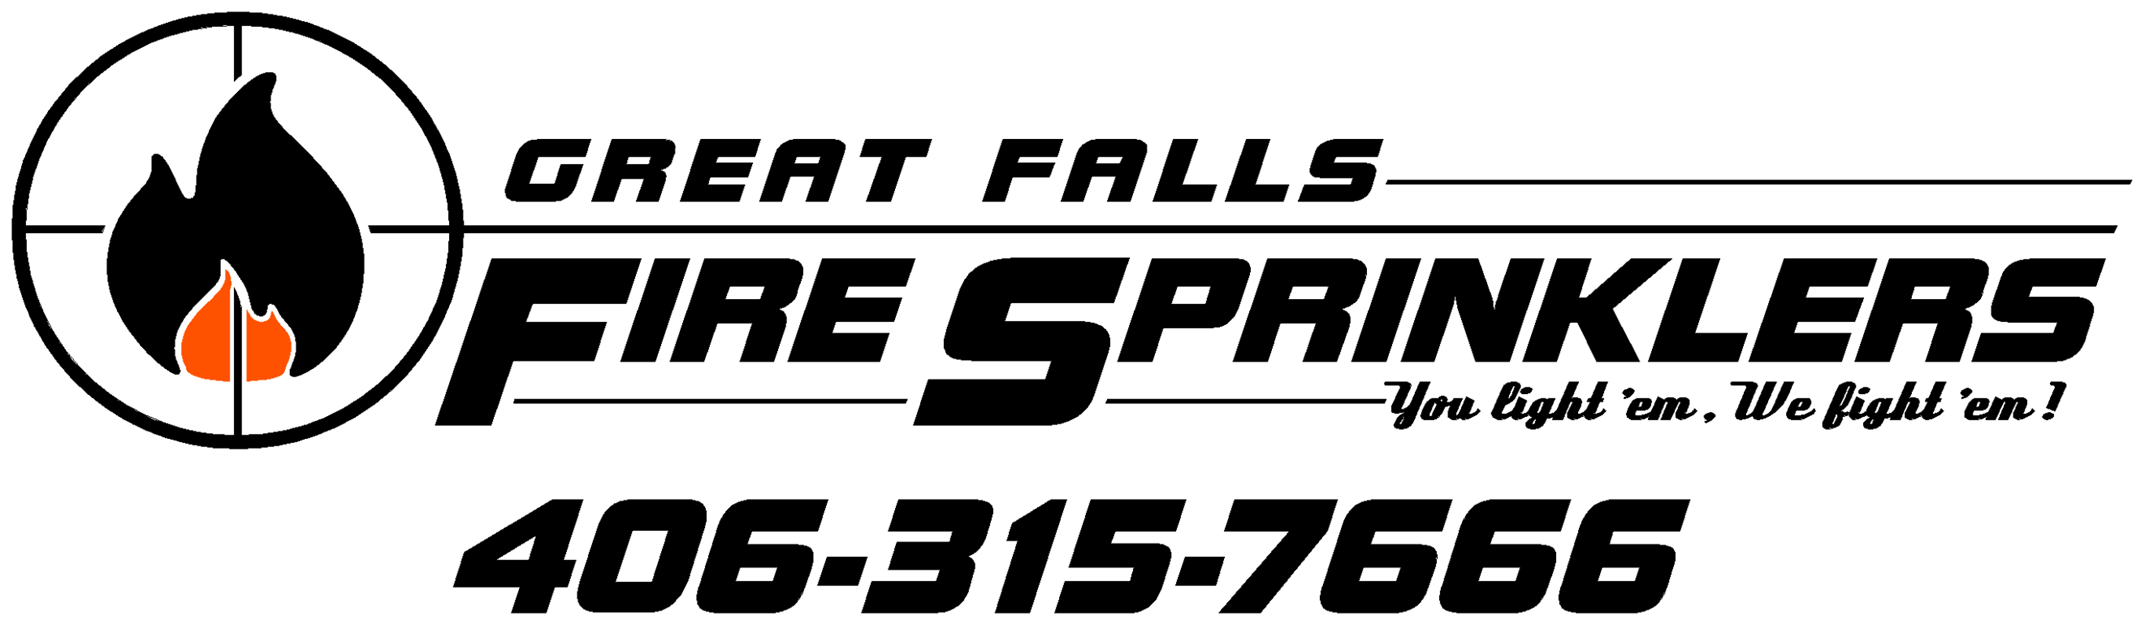 Great Falls Fire Sprinklers